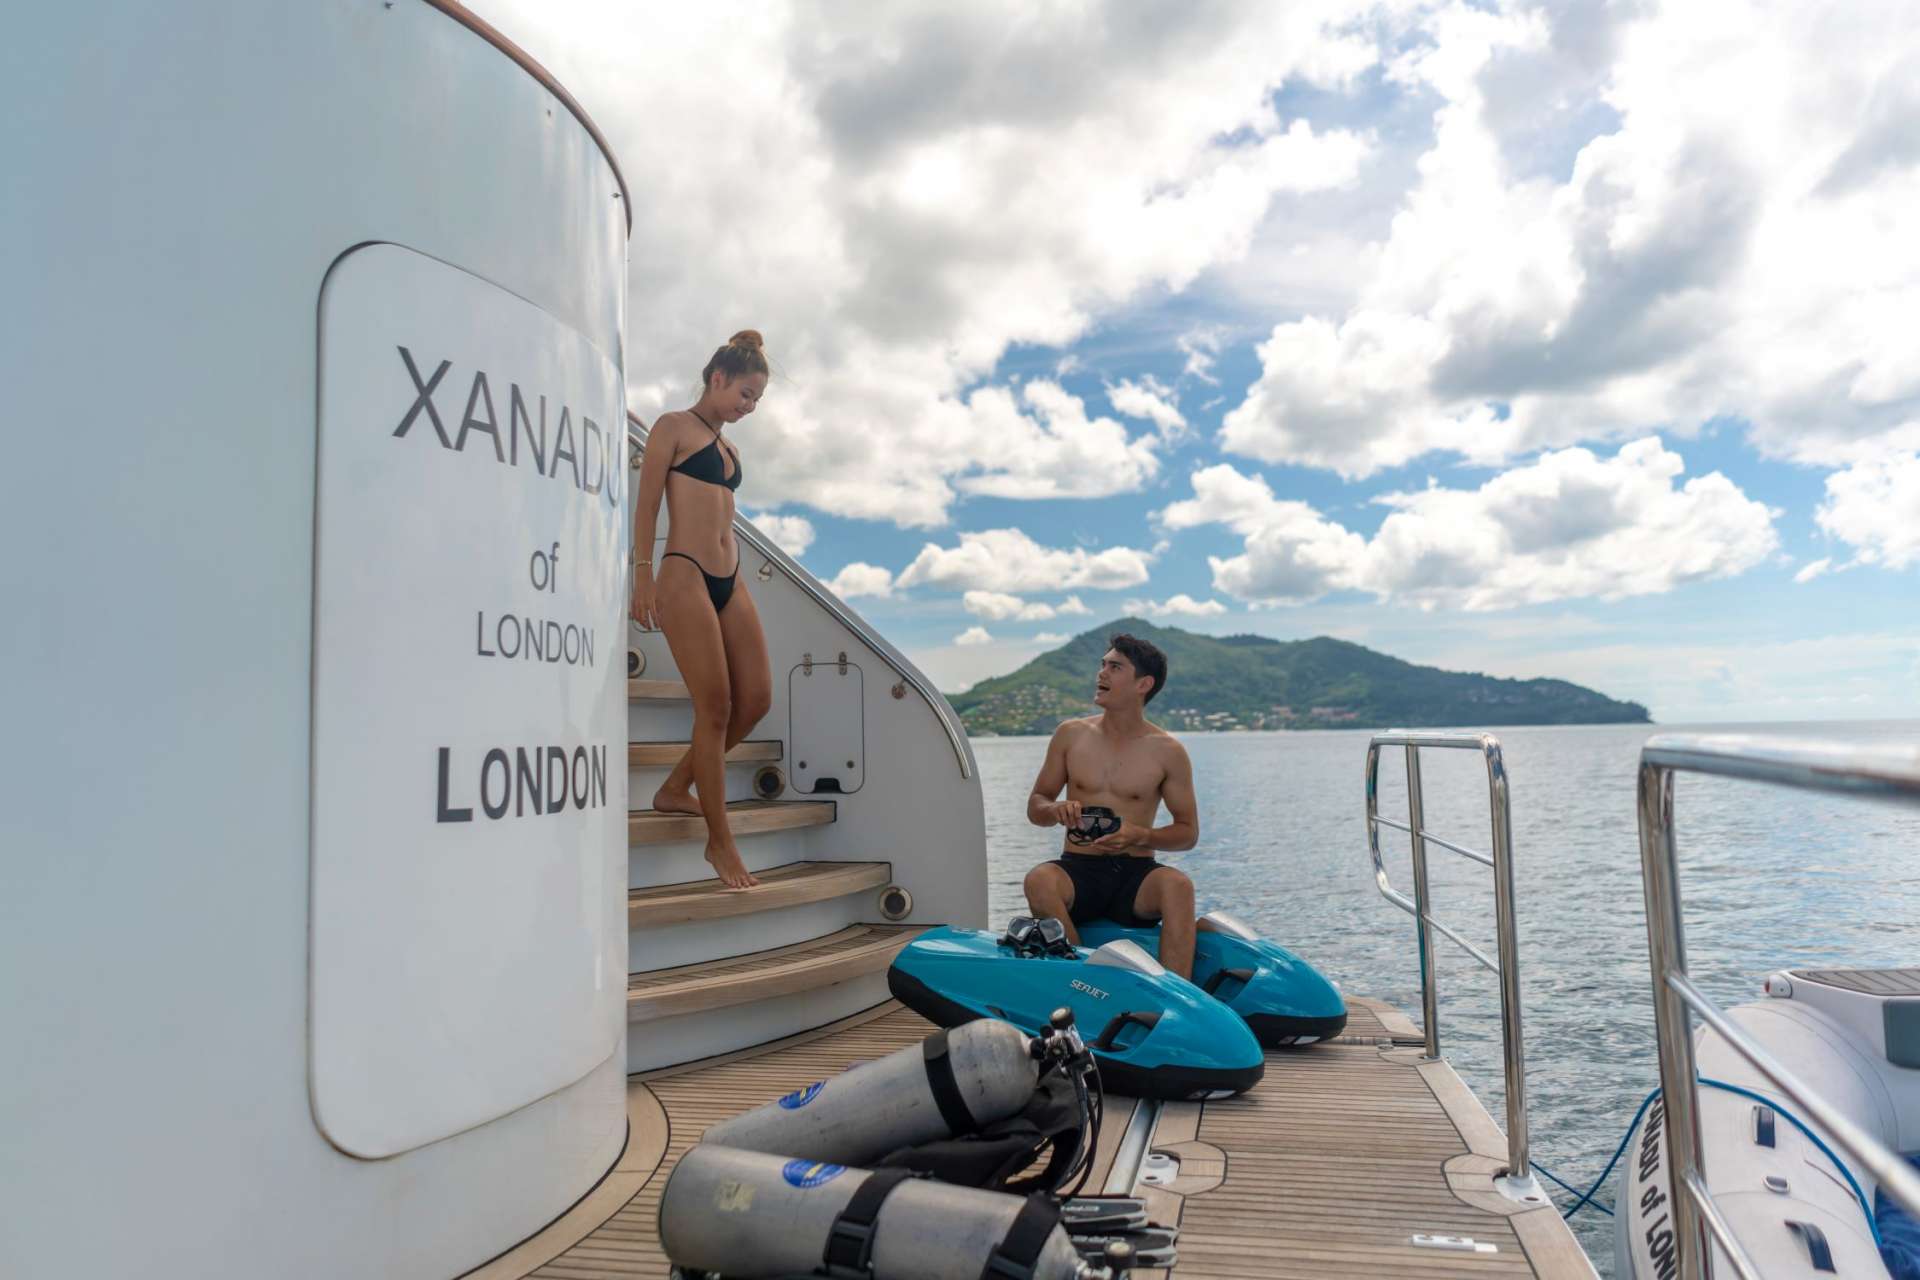 xanadu of london - Luxury yacht charter Thailand & Boat hire in SE Asia 5